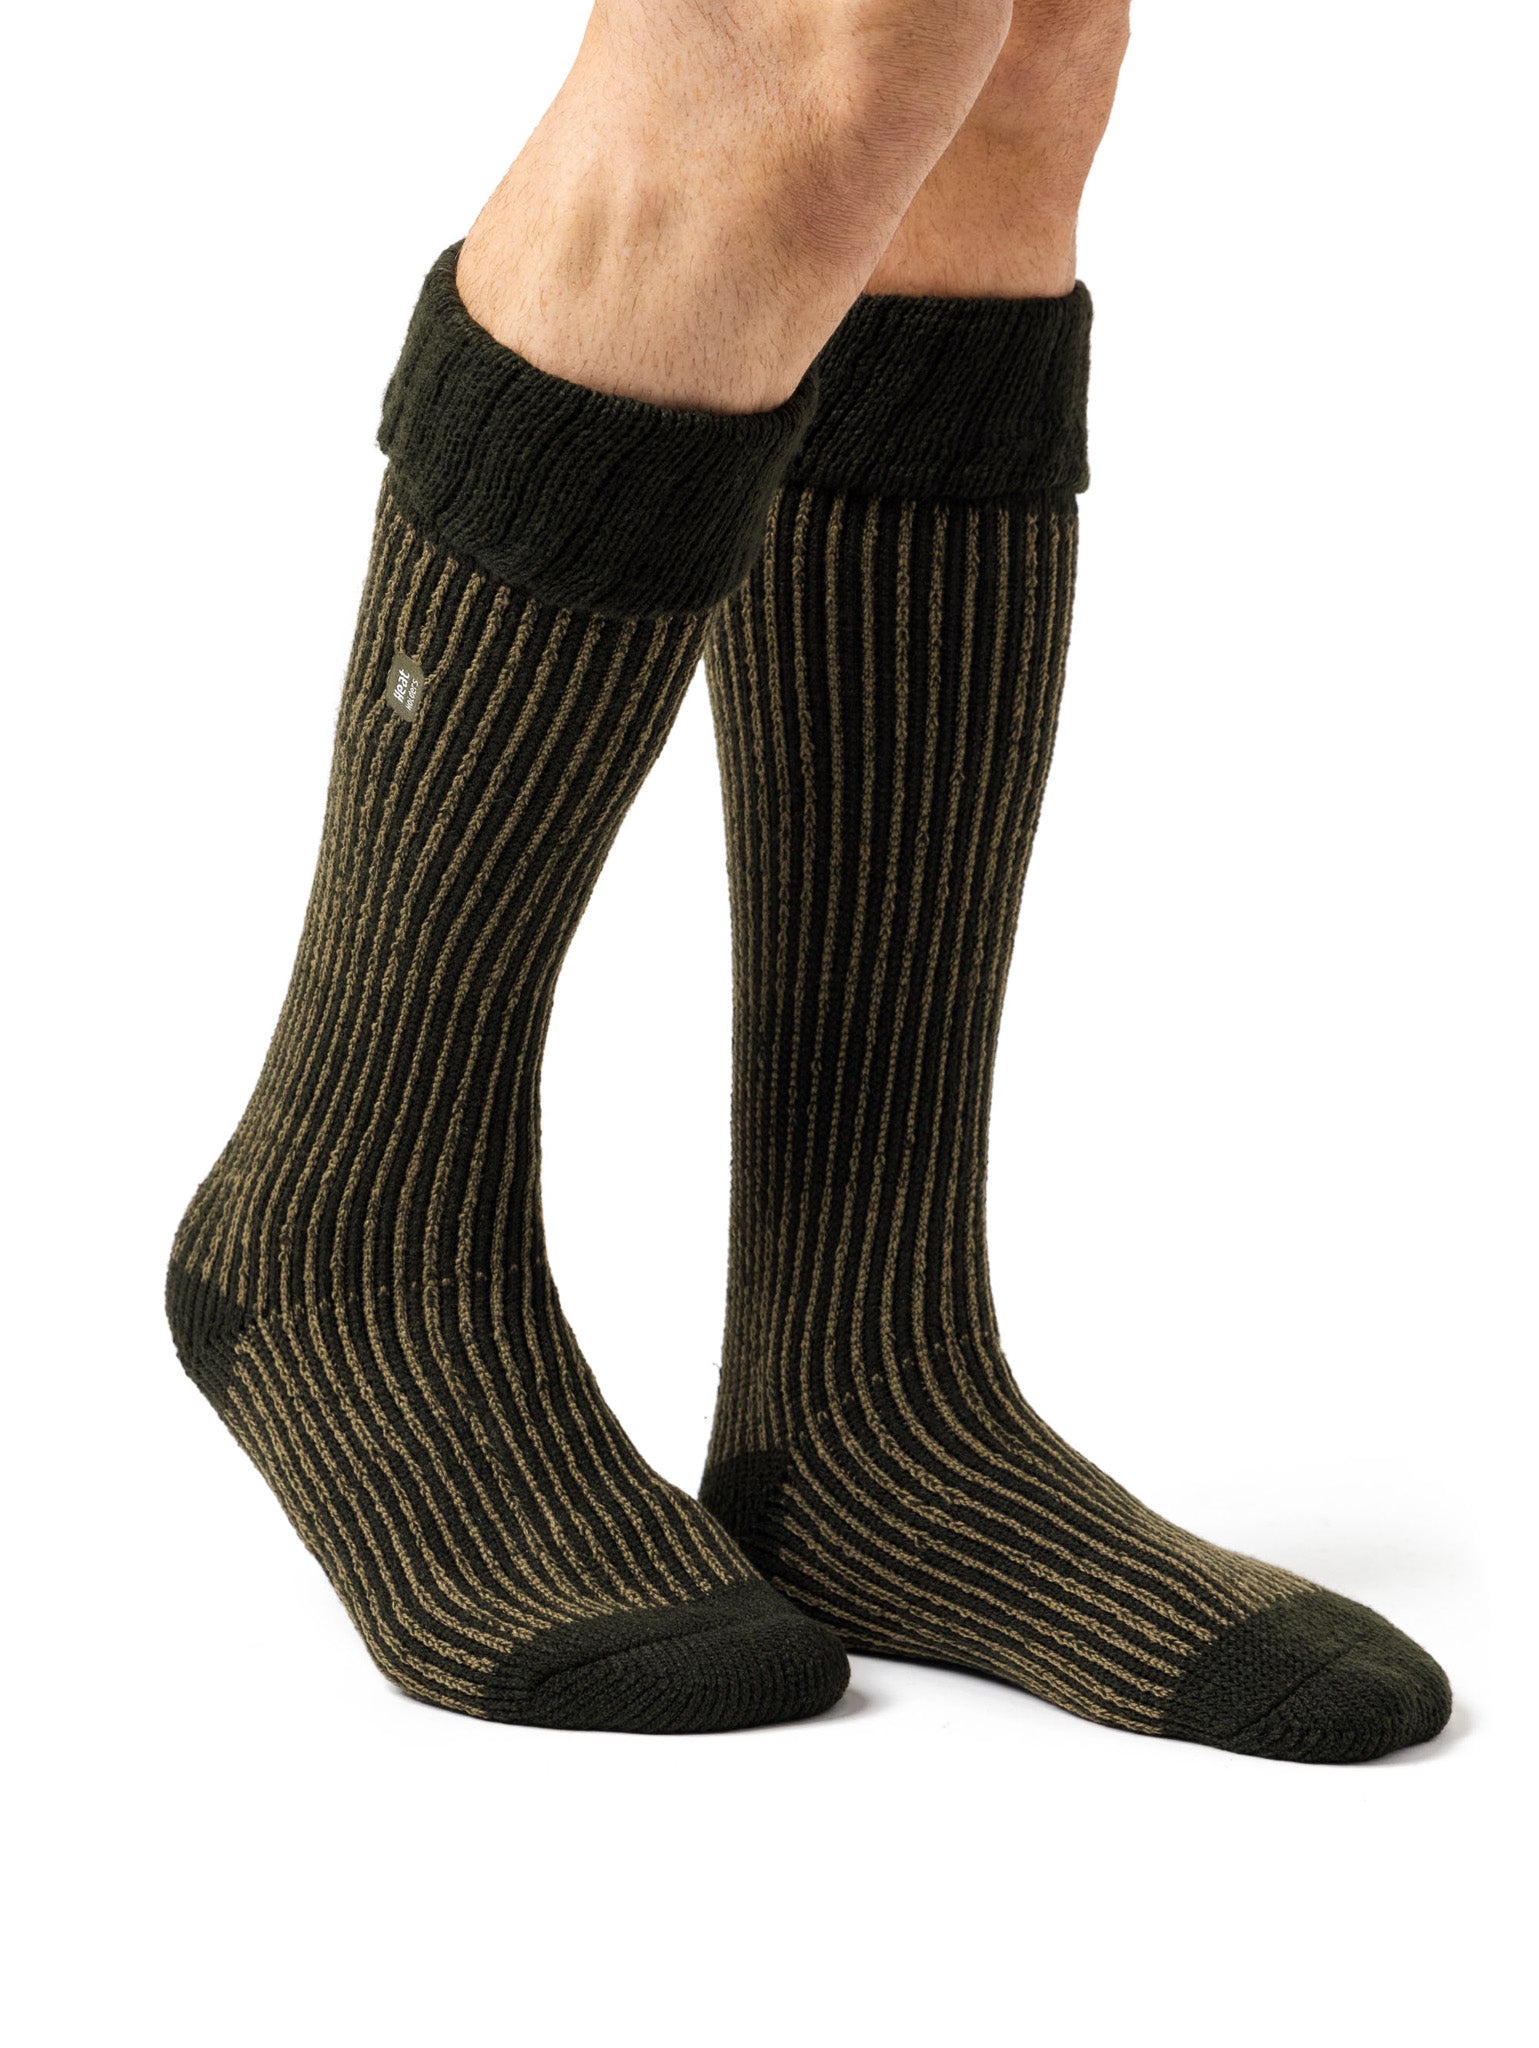 HEAT HOLDERS Ribbed Cuff Boot Socks- Mens 6-11